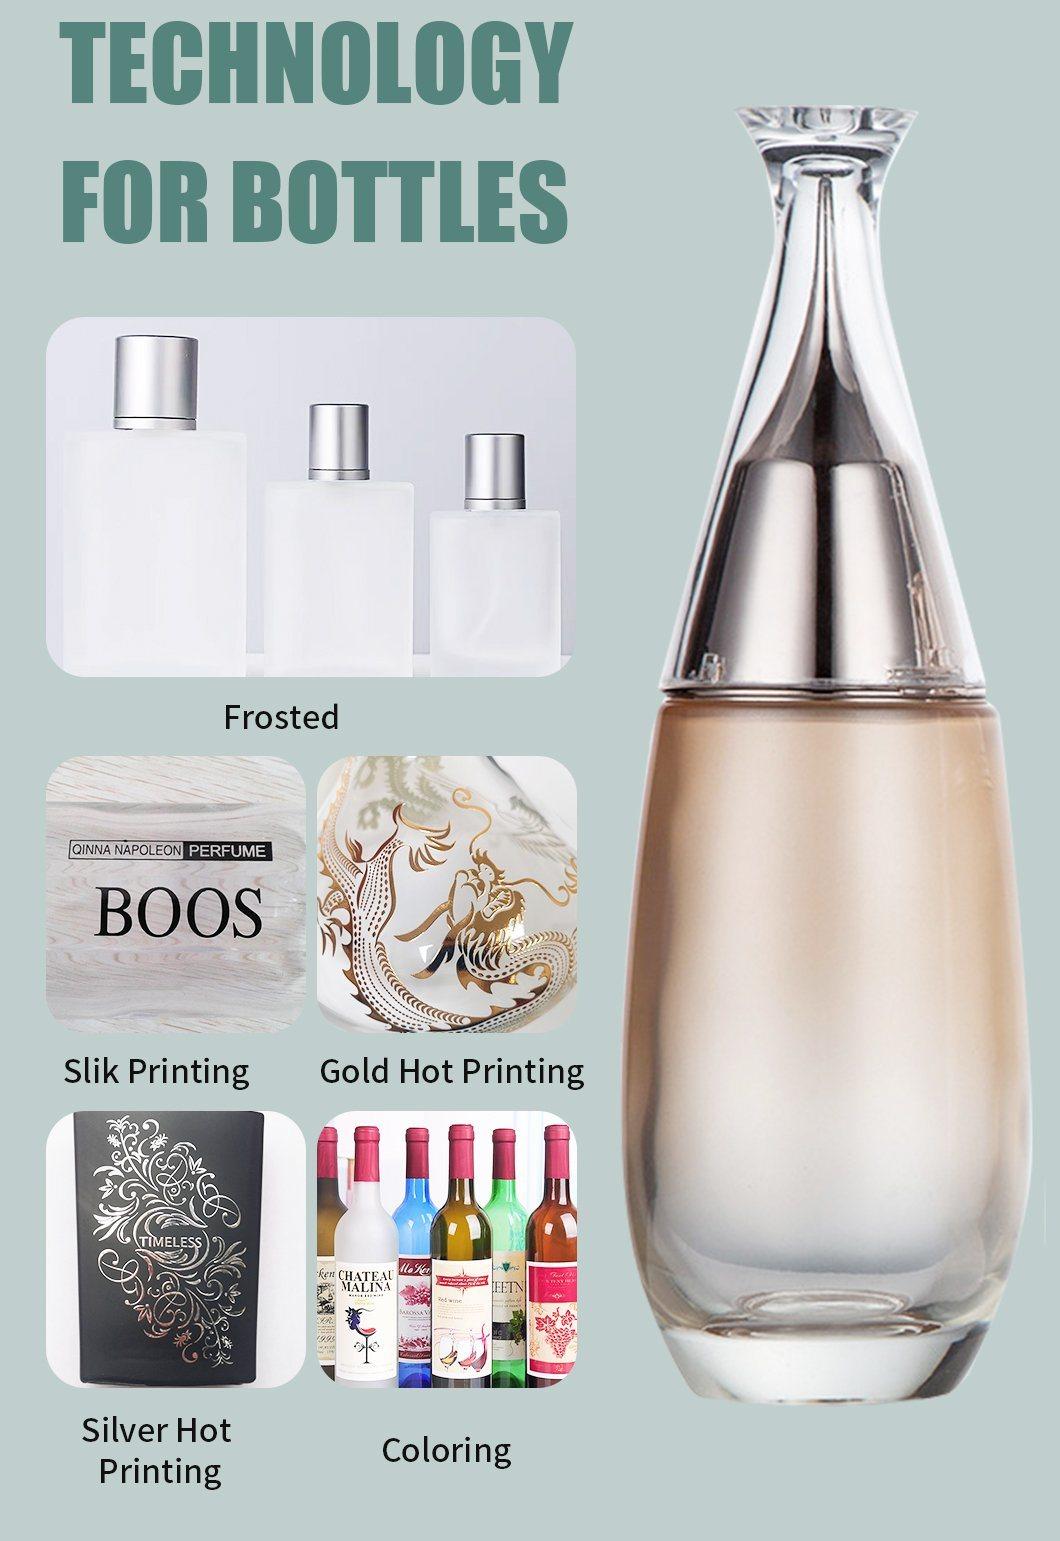 Flat Shoulder Spray Pump Light Gold Cap Glass Bottles for Attar and Perfume